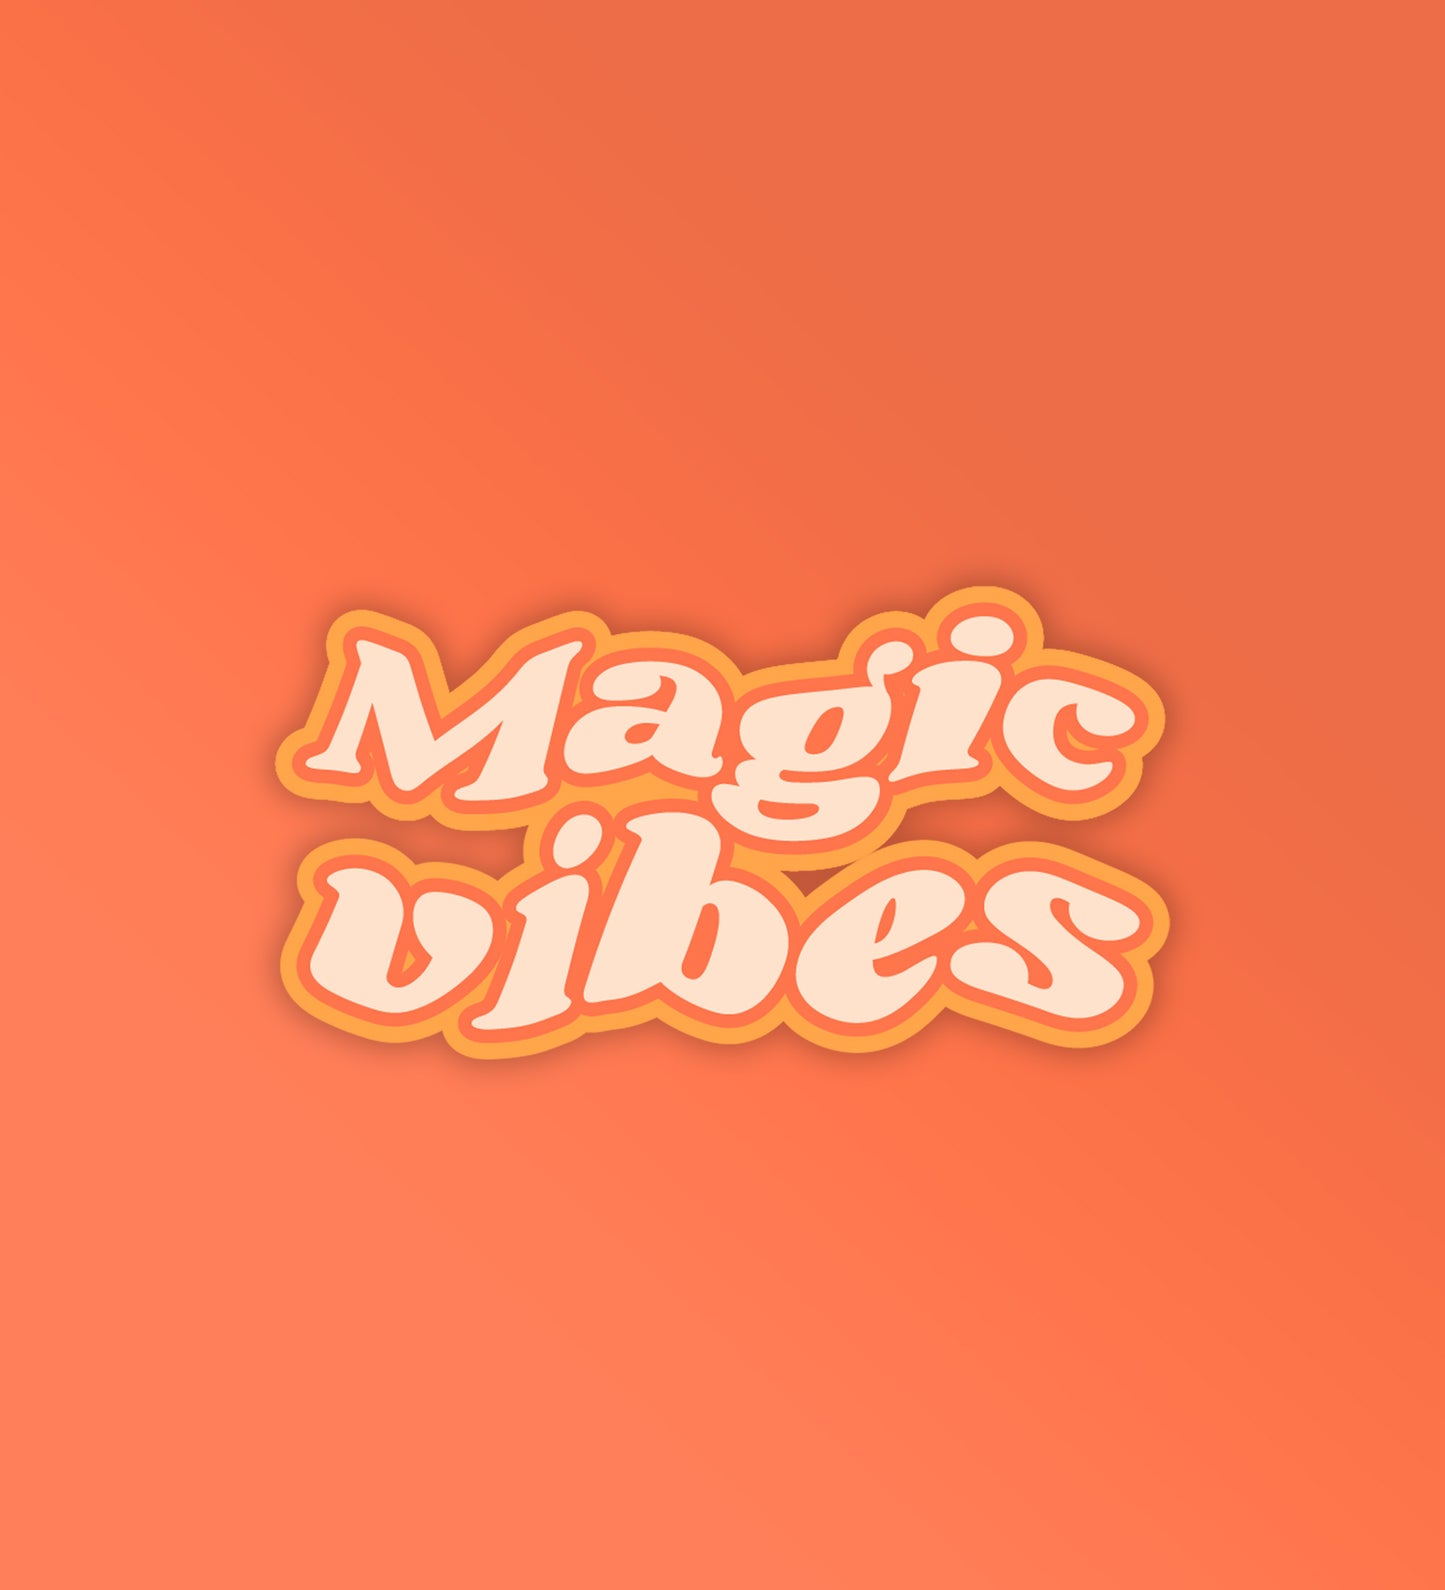 Magic Vibes | Mobile & Laptop Sticker